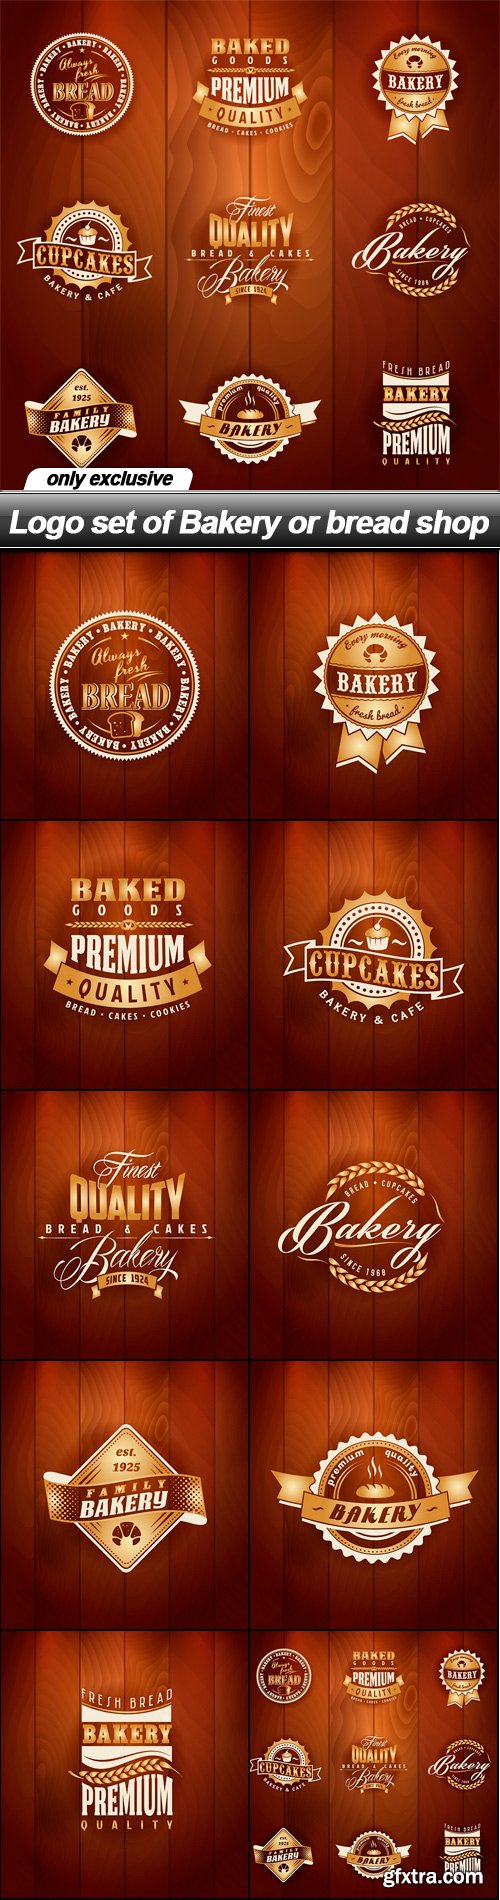 Logo set of Bakery or bread shop - 10 EPS